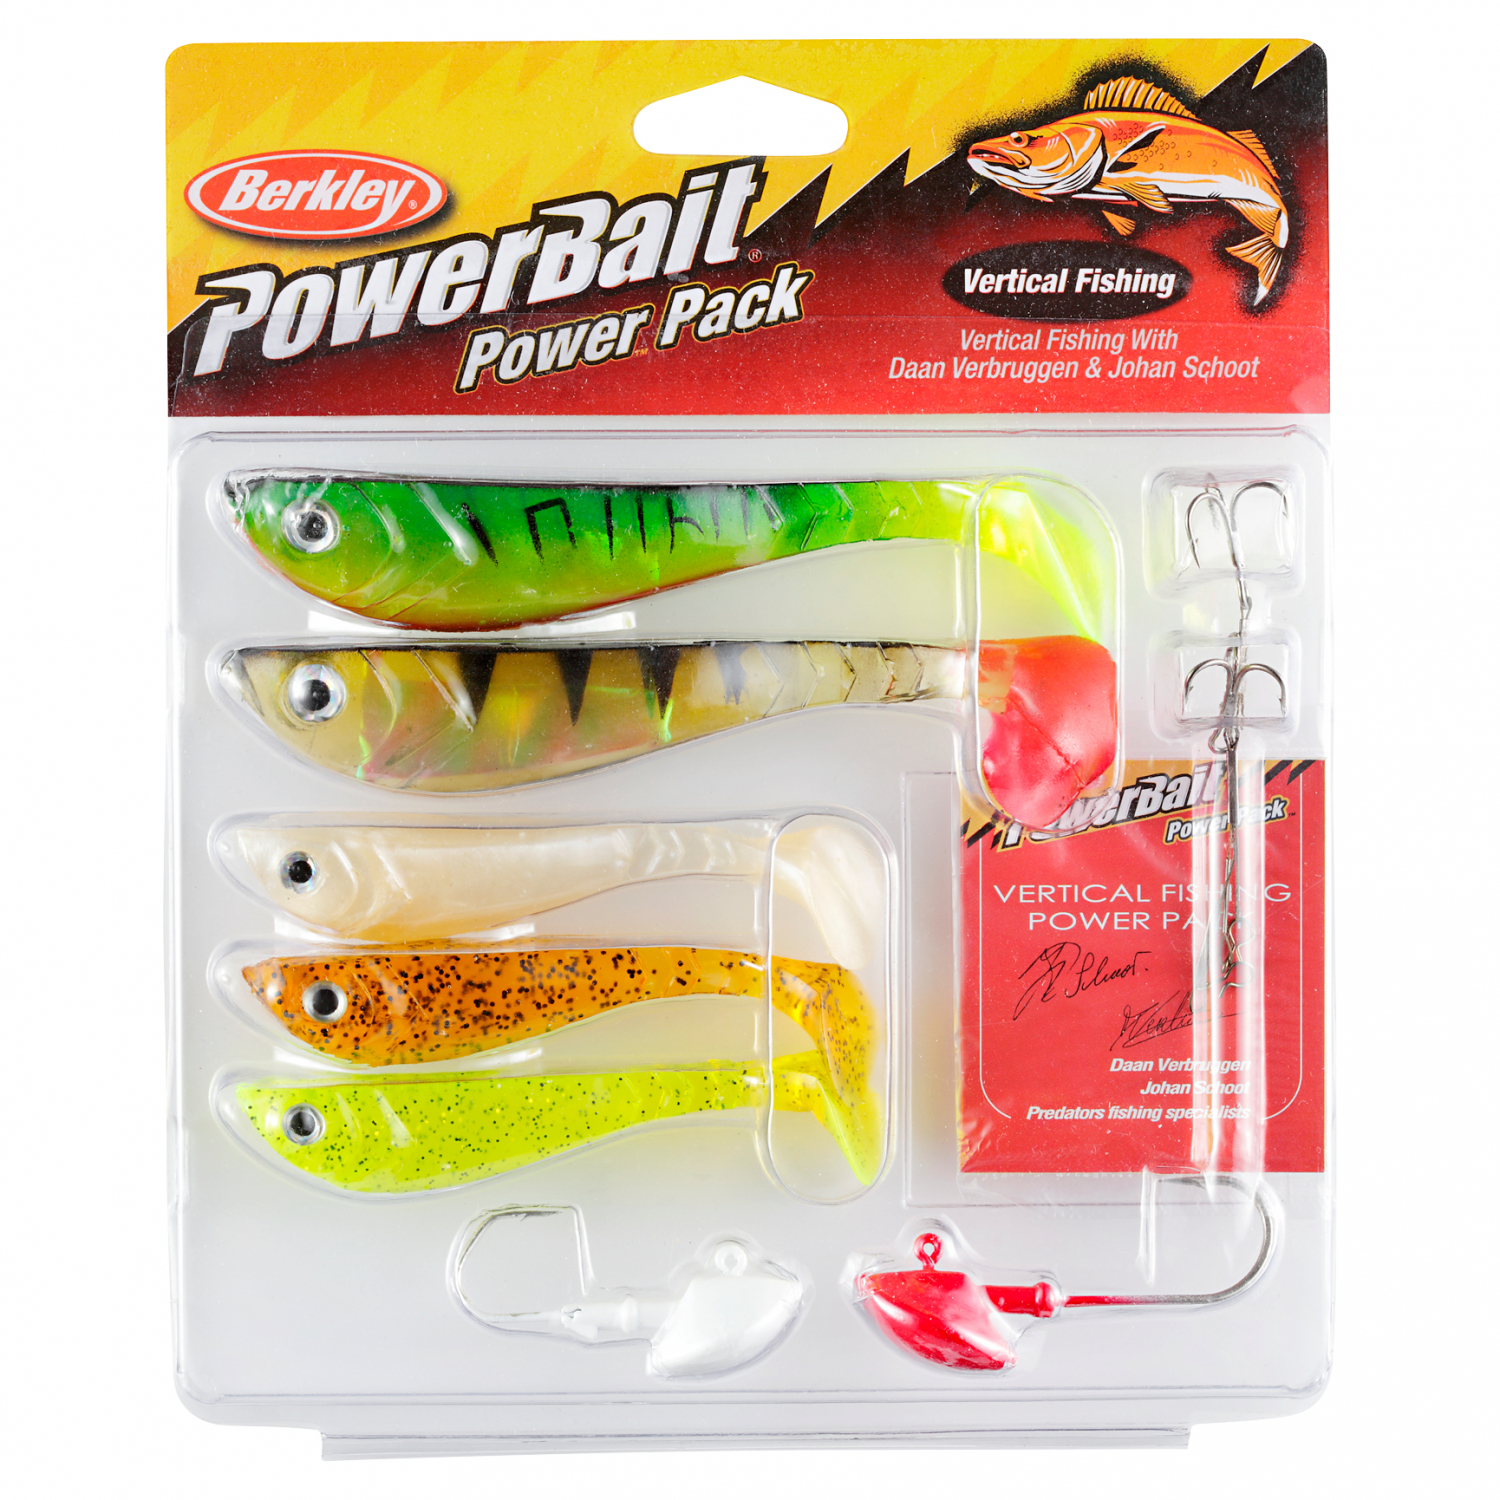 Berkley Vertical Fishing Kit Powerbait at low prices